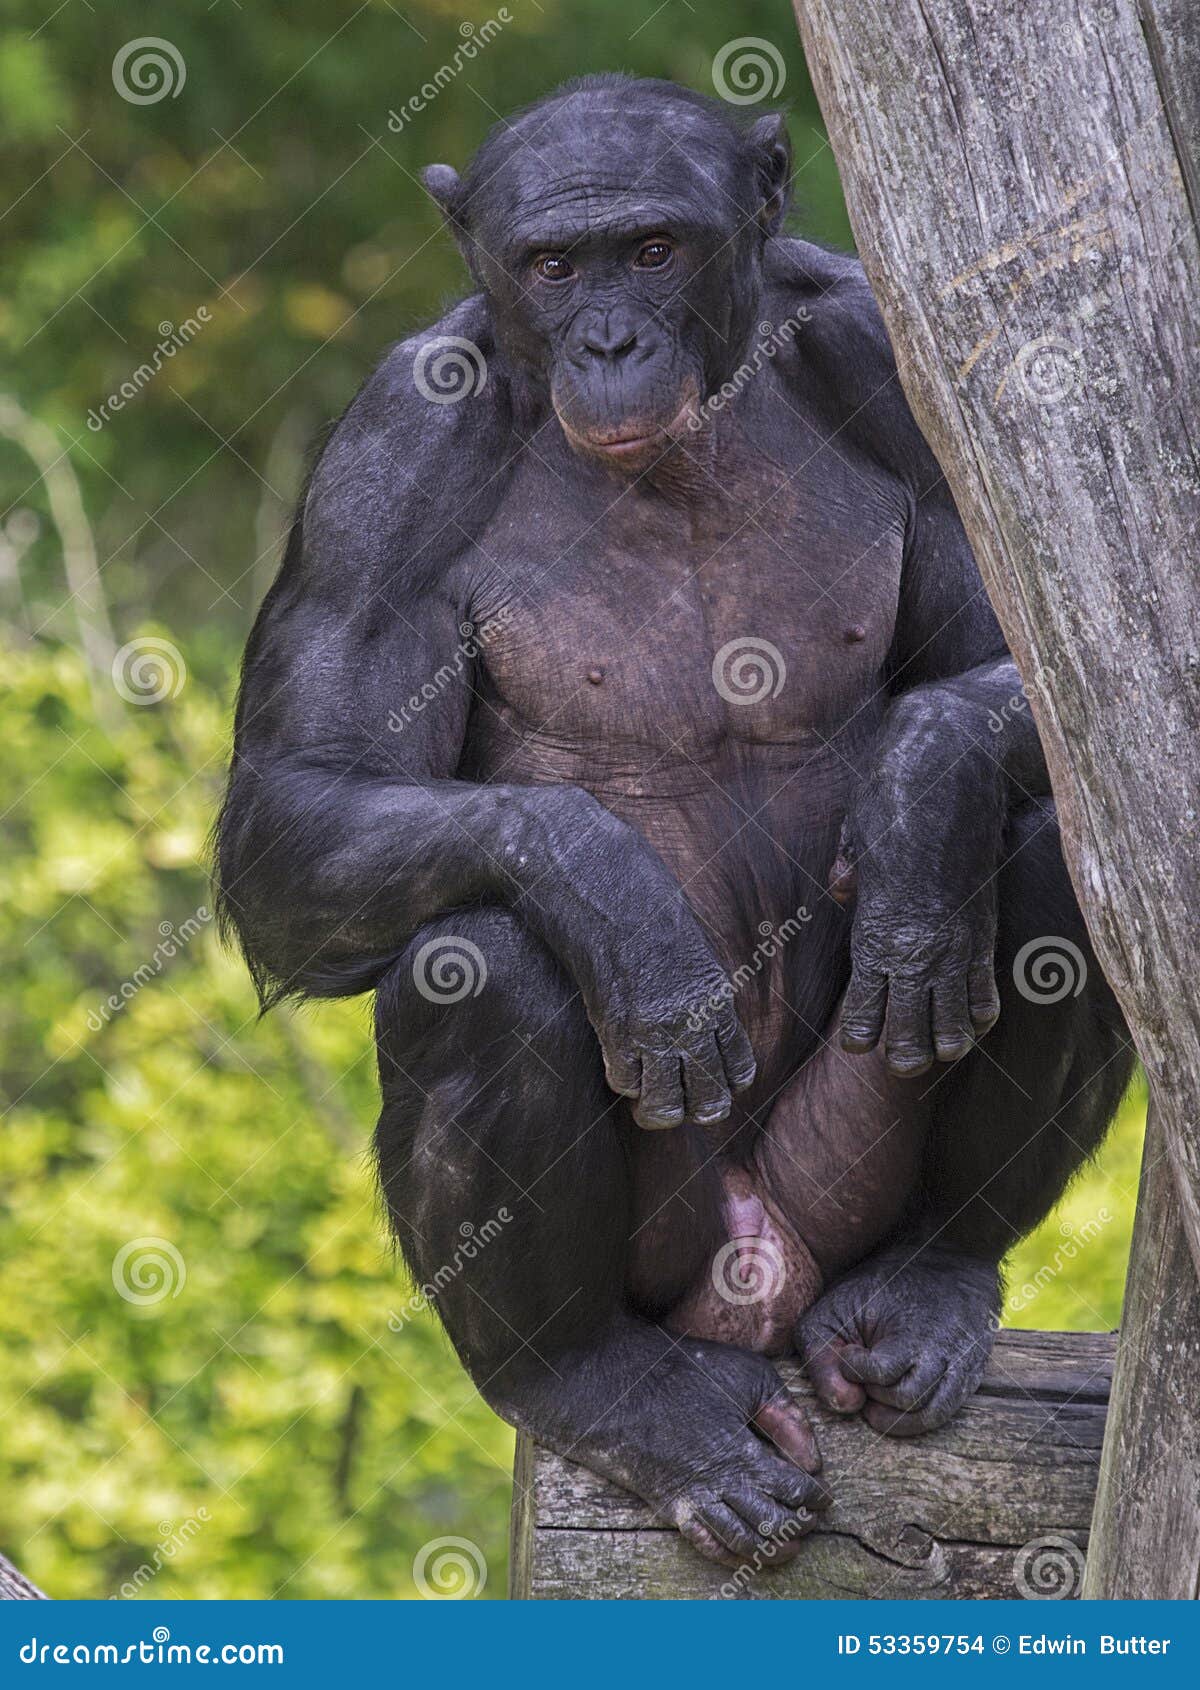 Banobo Bonobo: Fragments